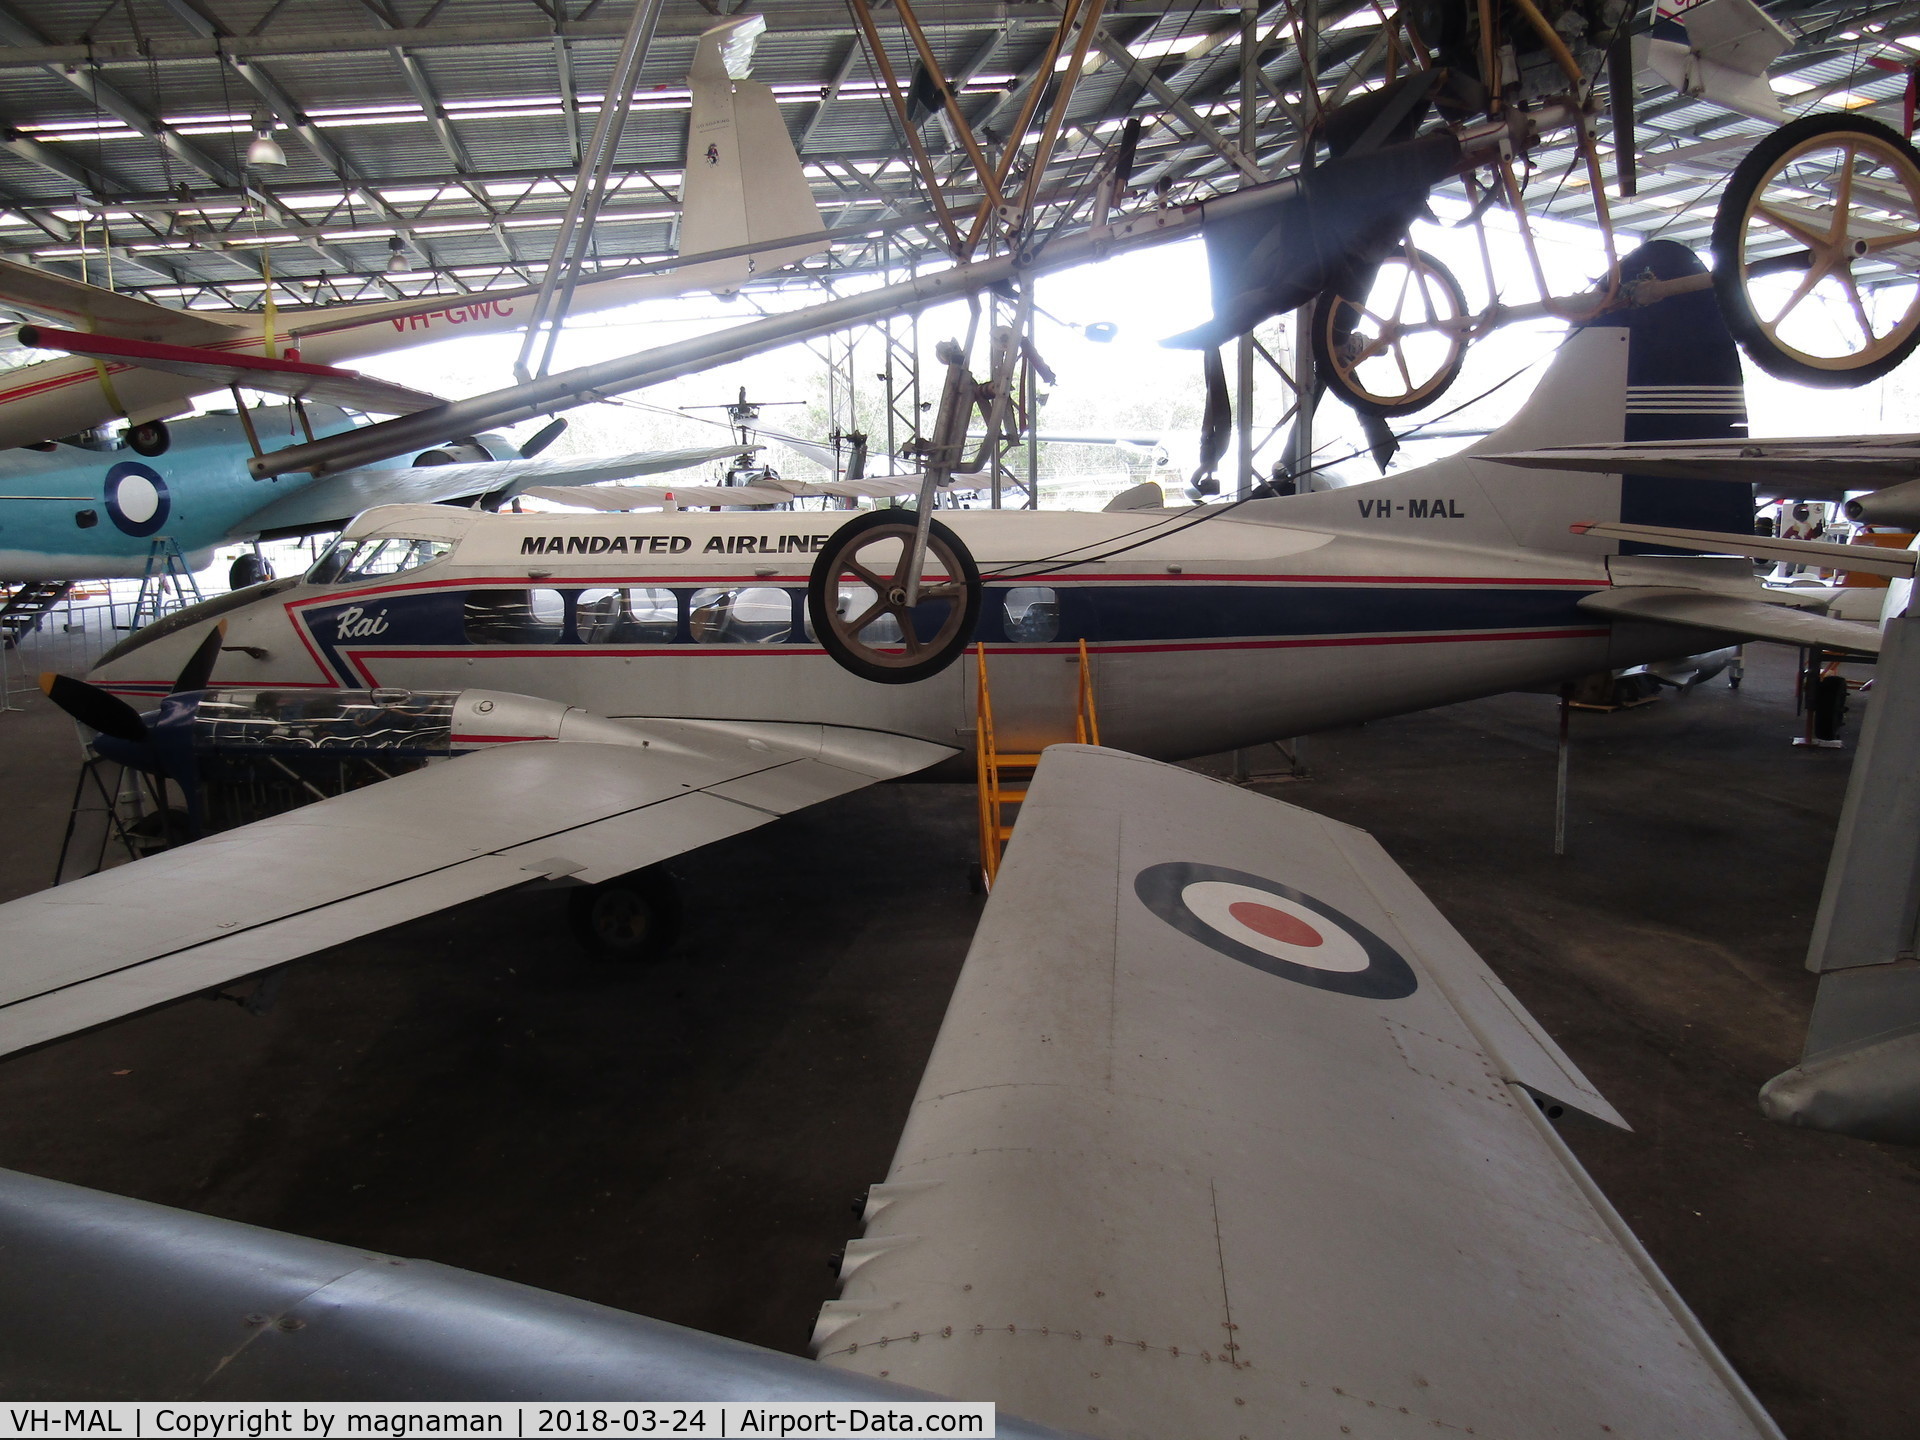 VH-MAL, 1948 De Havilland DH-104 Dove 1 C/N 04120, pretty cramped museum hangar at caloundra